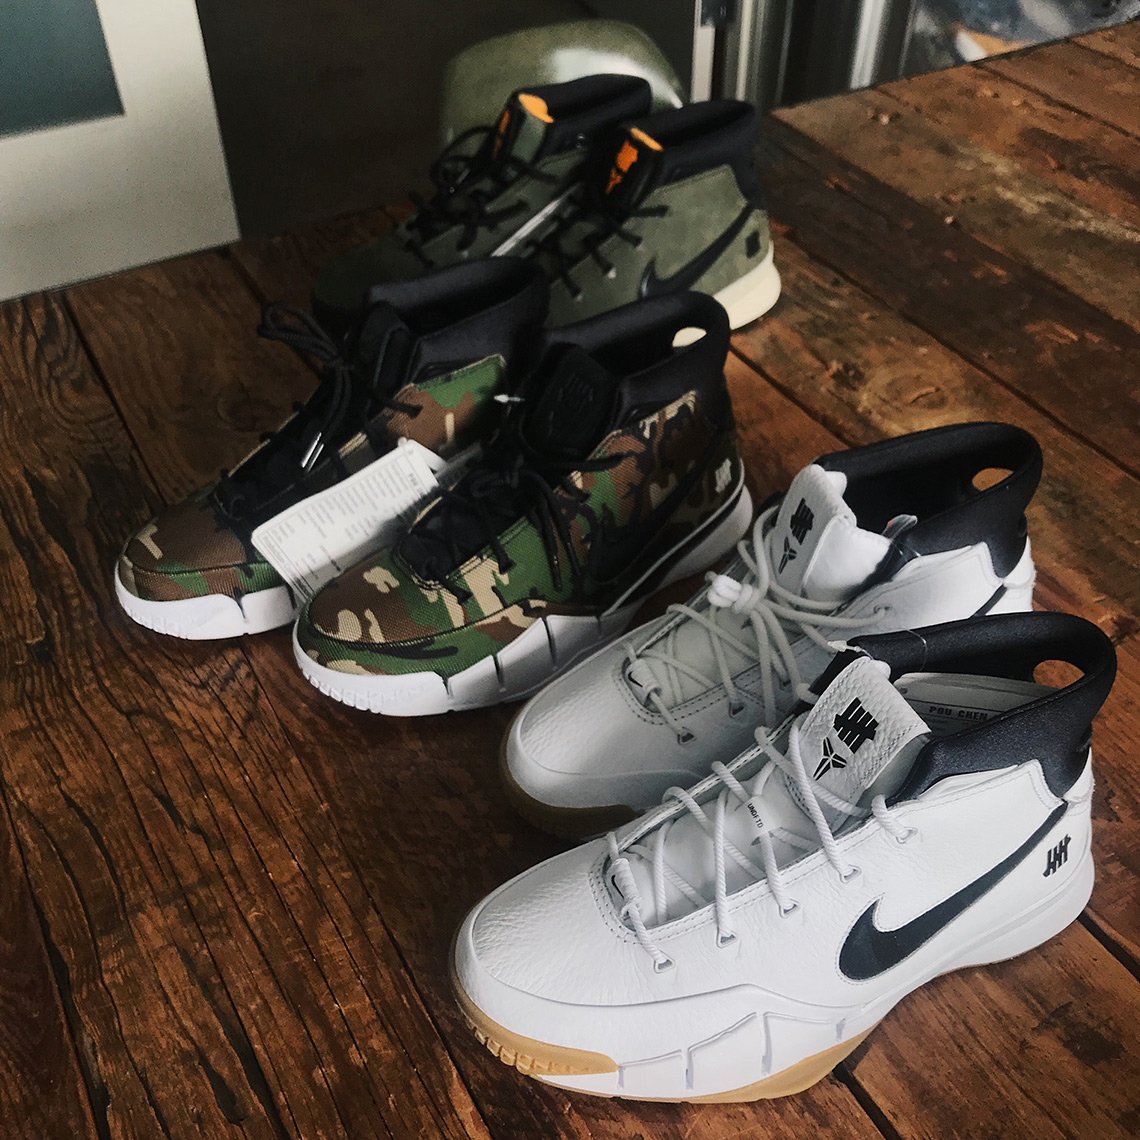 UNDEFEATED Nike Zoom Kobe Protro - Camo + White + Olive | SneakerNews.com